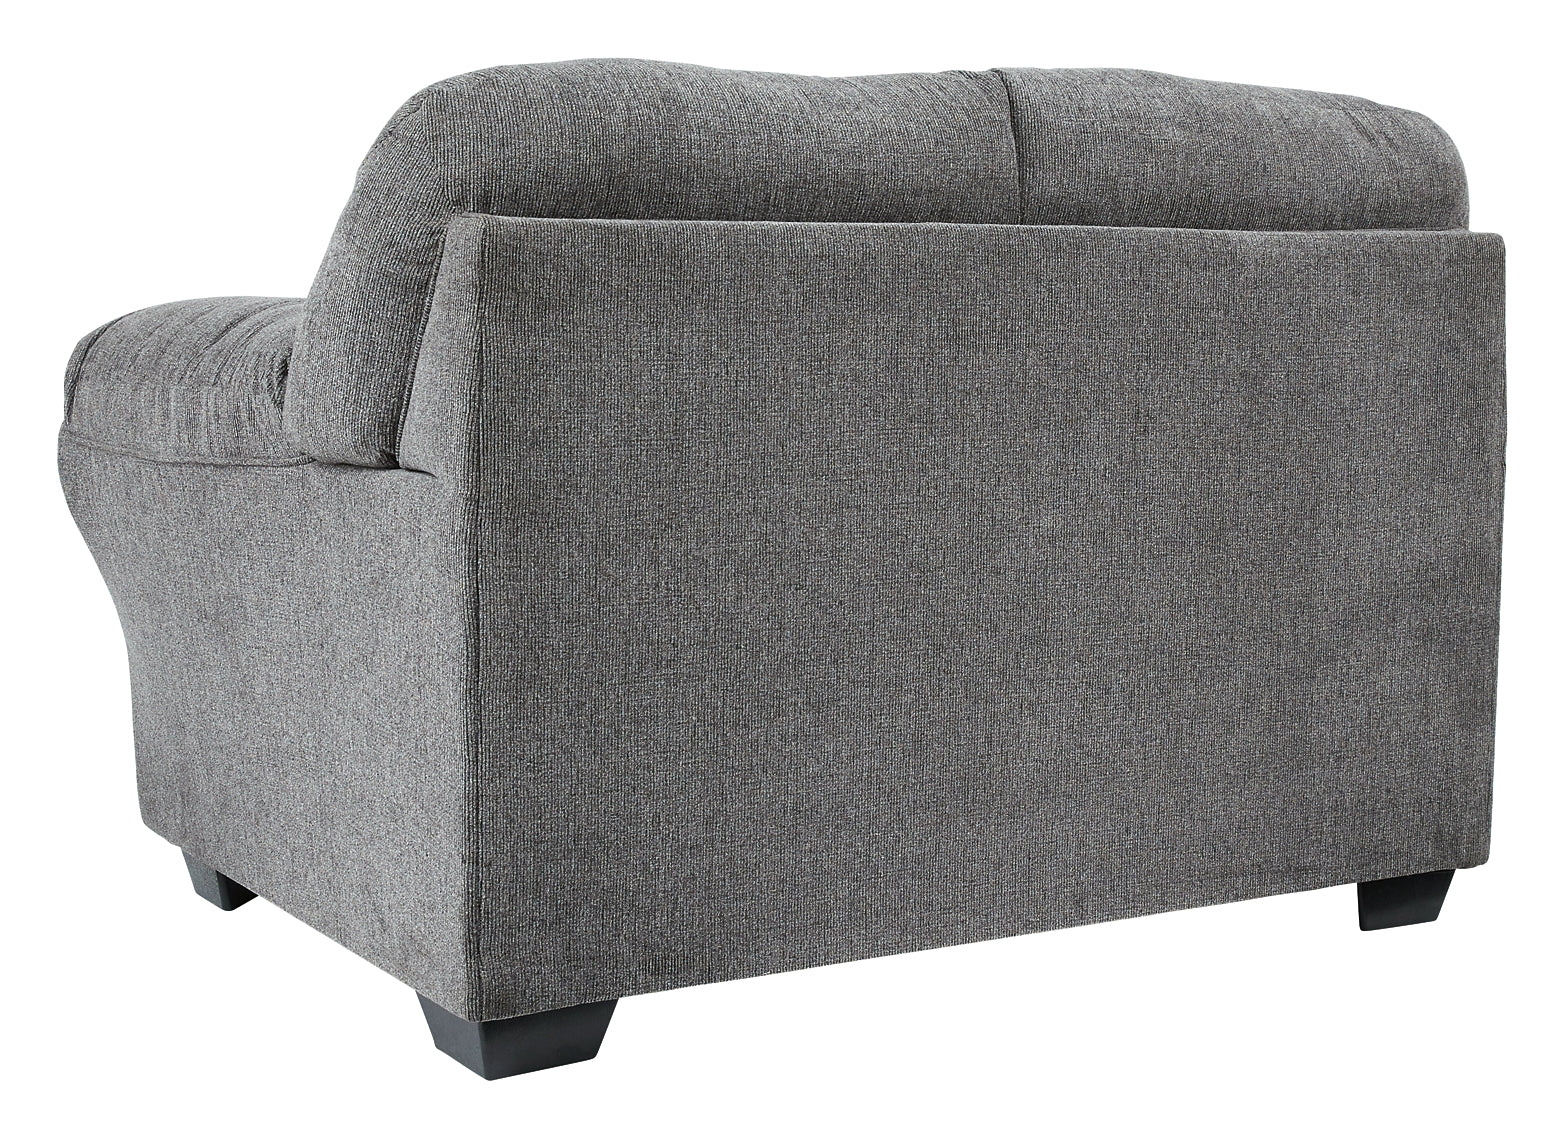 Allmaxx Sofa, Loveseat and Recliner Cloud 9 Mattress & Furniture